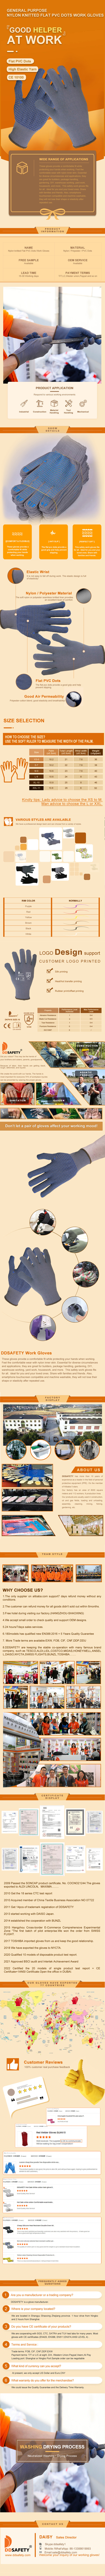 Dark Blue Dotted Pvc Nylon Work Gloves Single Sided Dotted Working Gloves - DKP416 Dark Blue Dotted Pvc Nylon Work Gloves Single Sided Dotted Working Gloves - DKP416 gloves,work gloves,hand gloves,nylon gloves,pvc dotted gloves